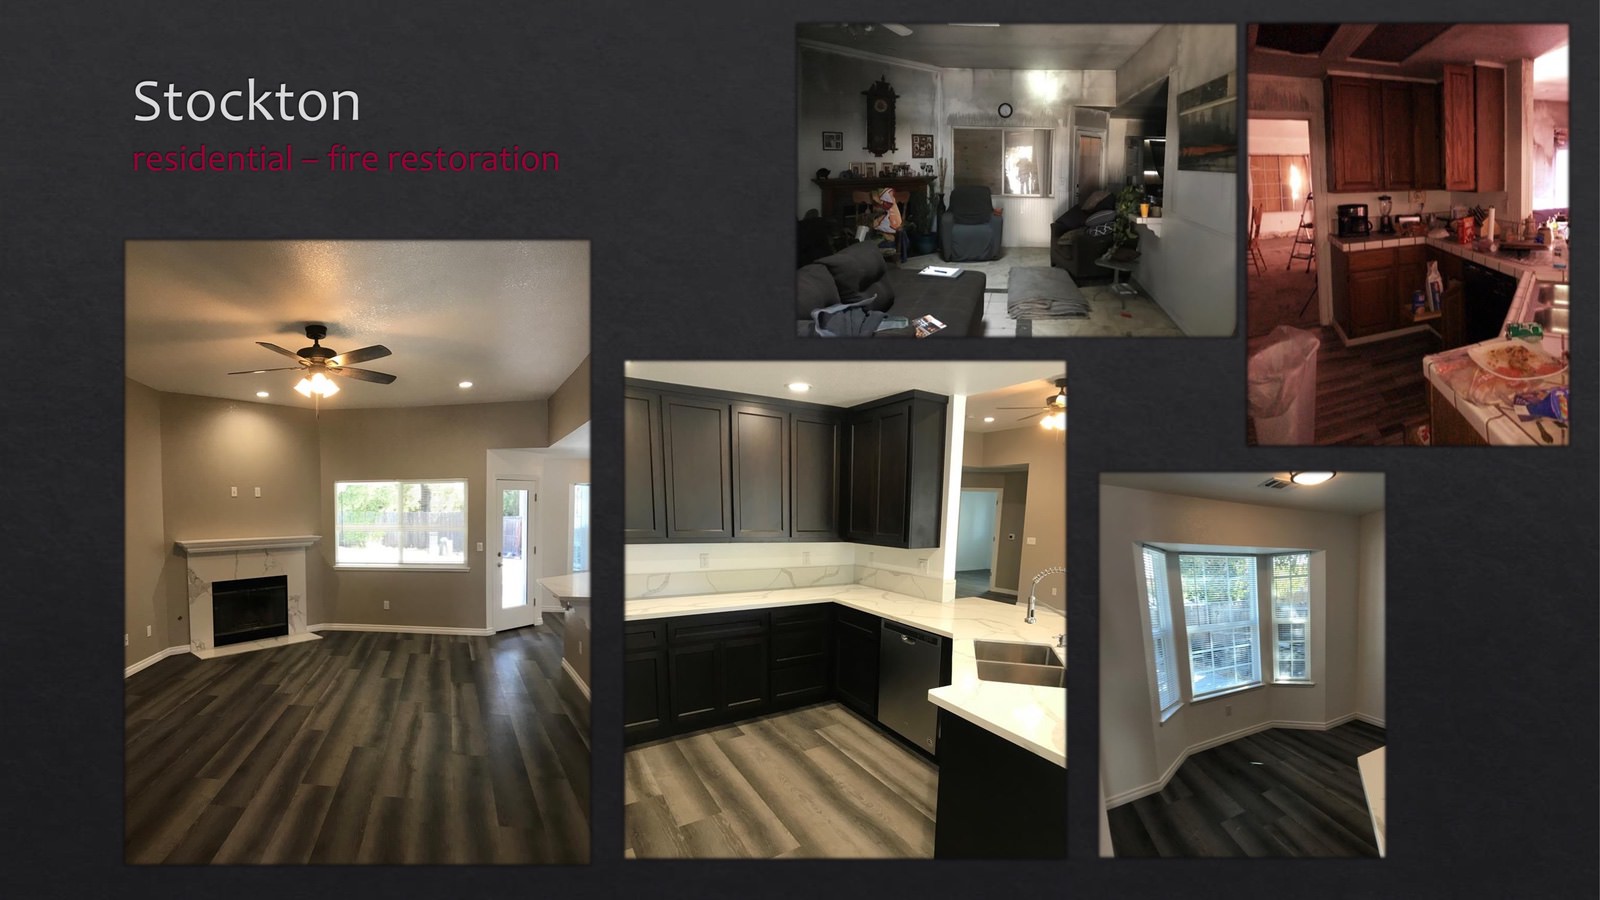 Stockton Residential fire restoration - kitchen + living room - lightbox